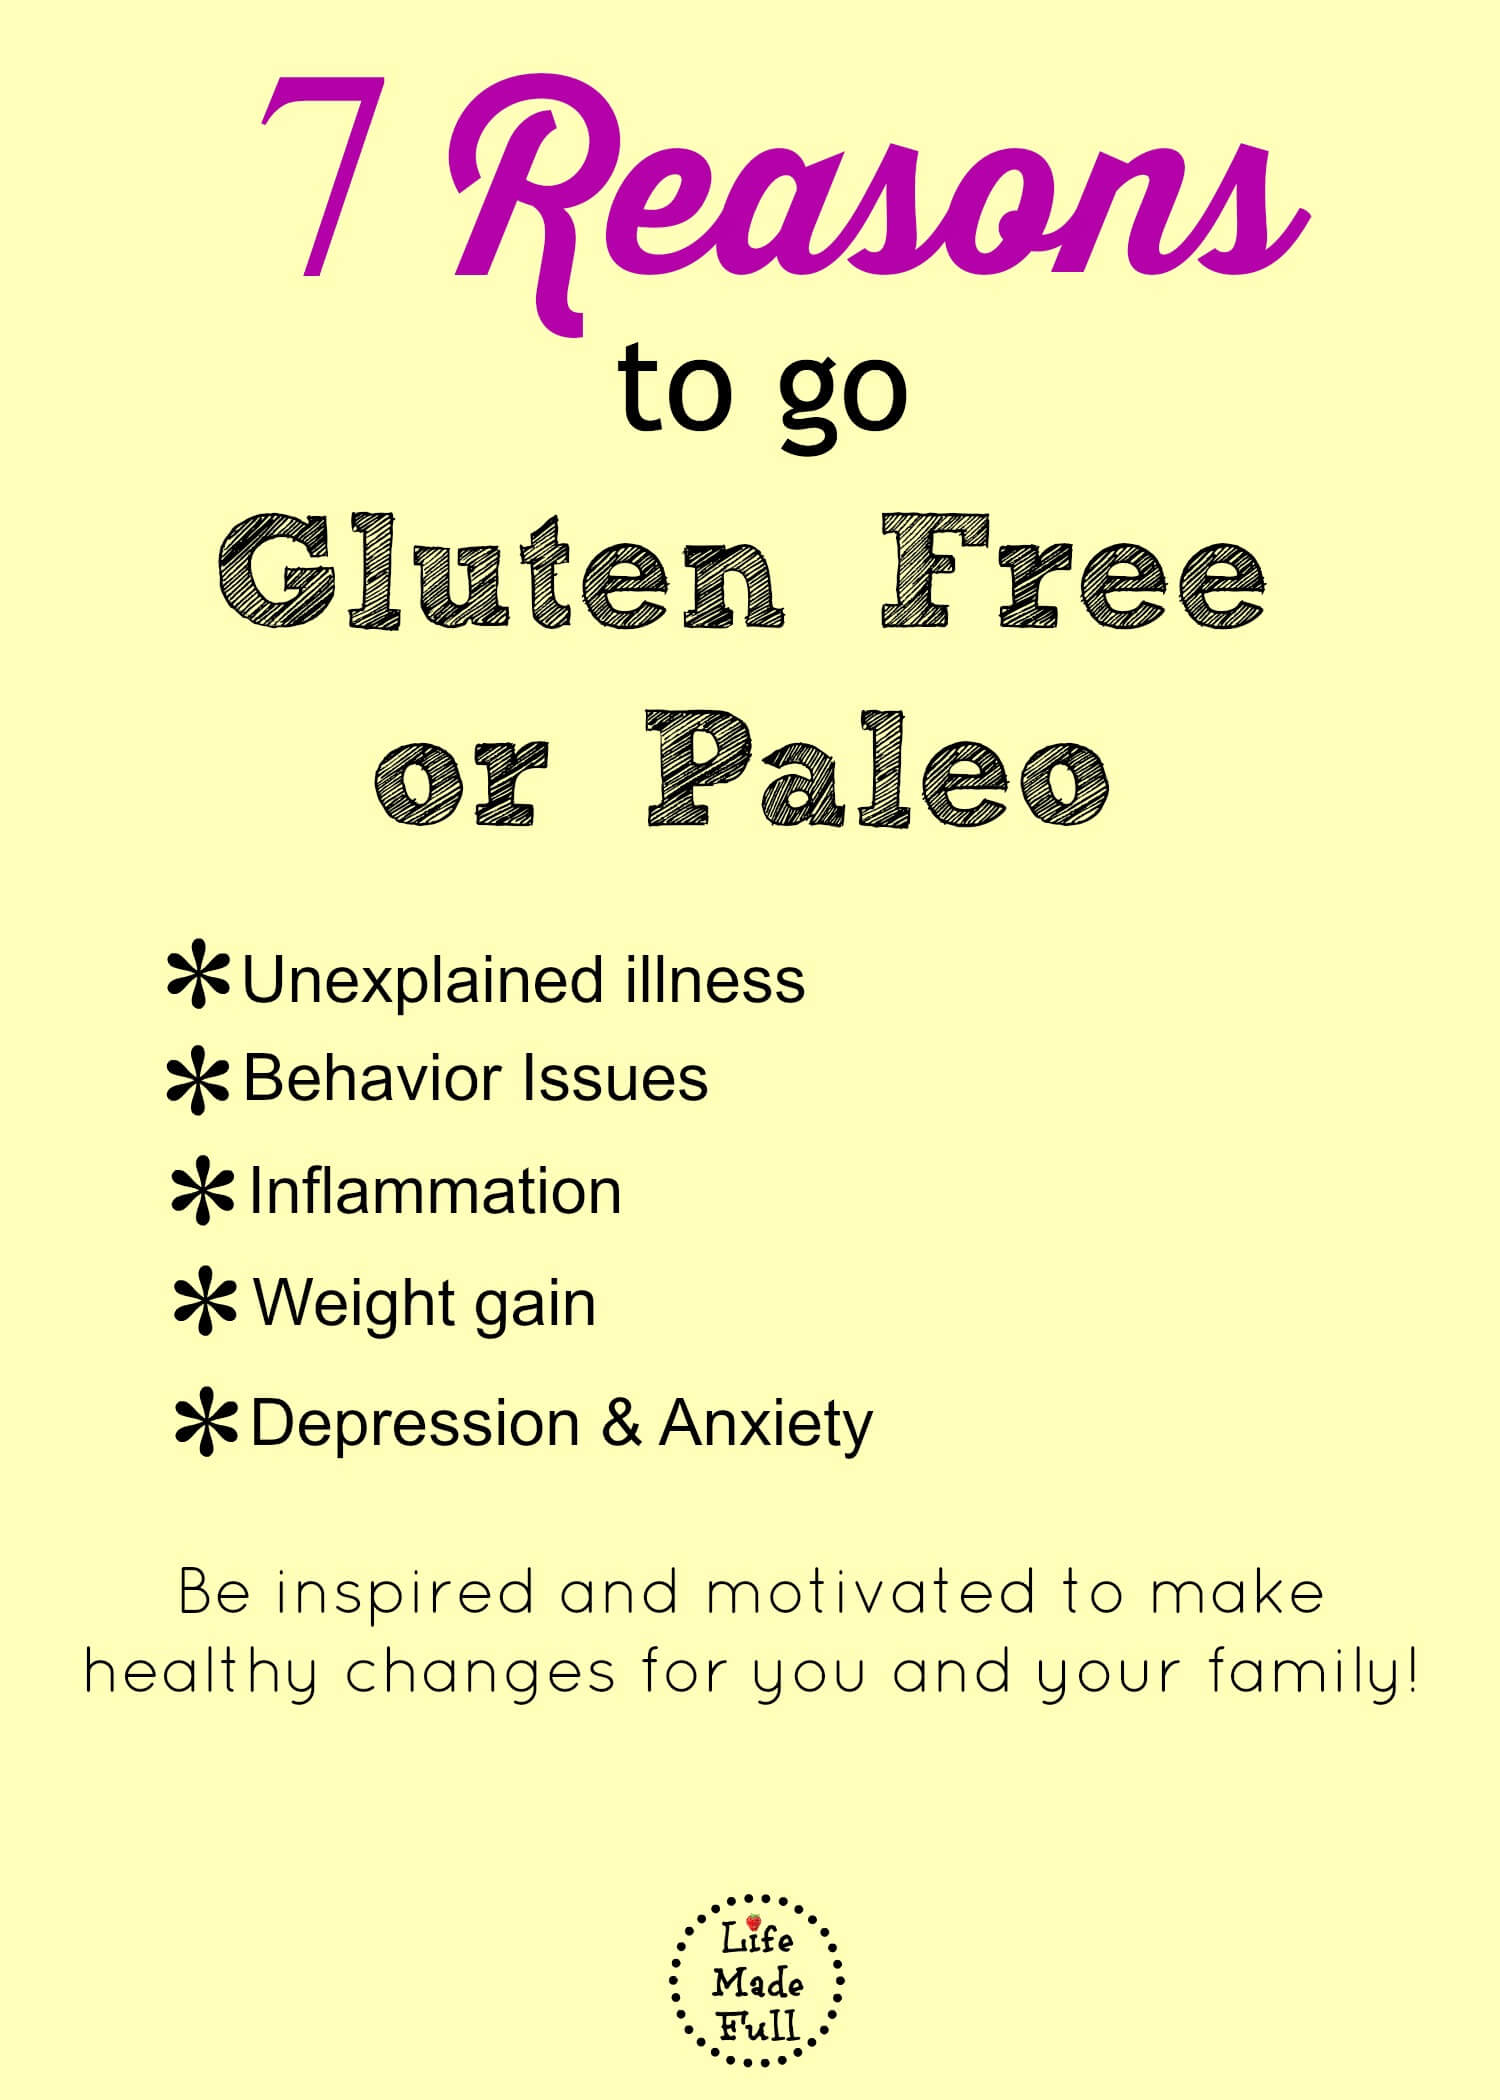 7 Reasons to go Gluten Free or Paleo